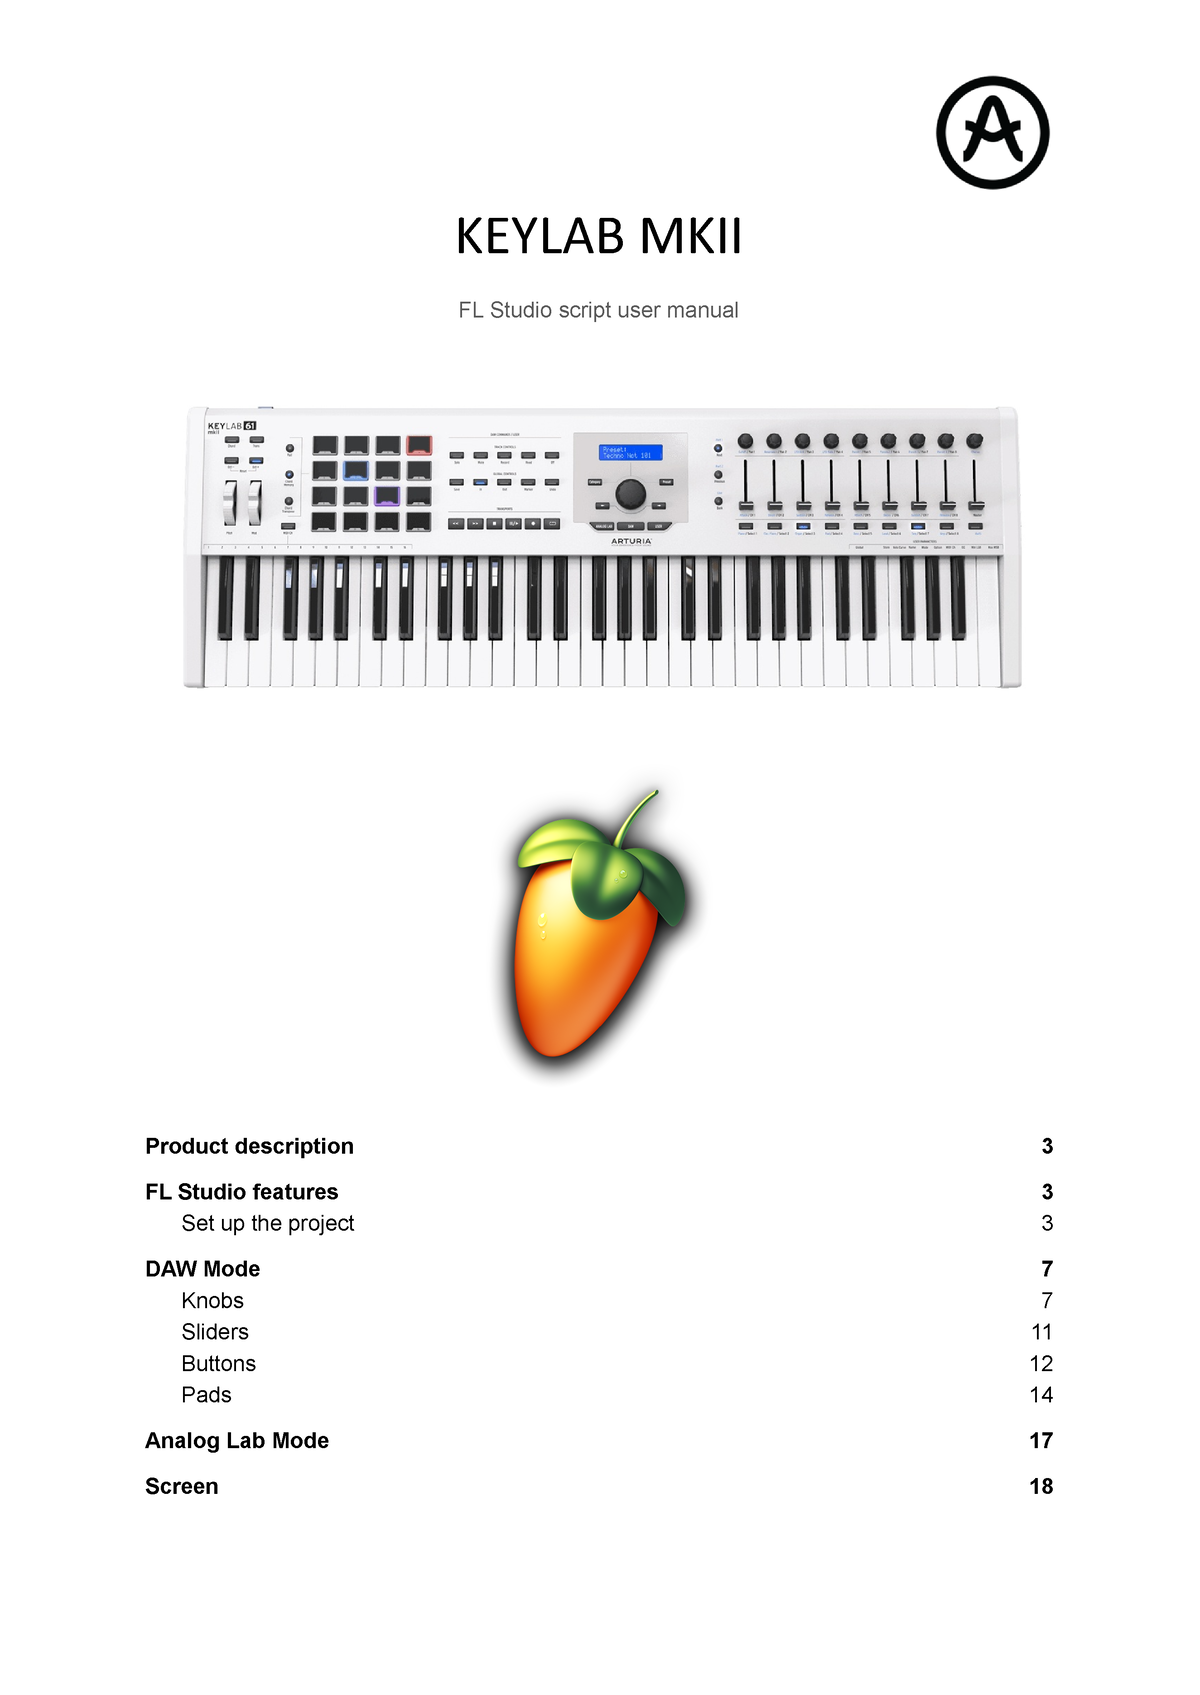 Key Lab mk II FL Studio User Guide V1 - KEYLAB MKII Product description FL  Studio script user manual - Studocu